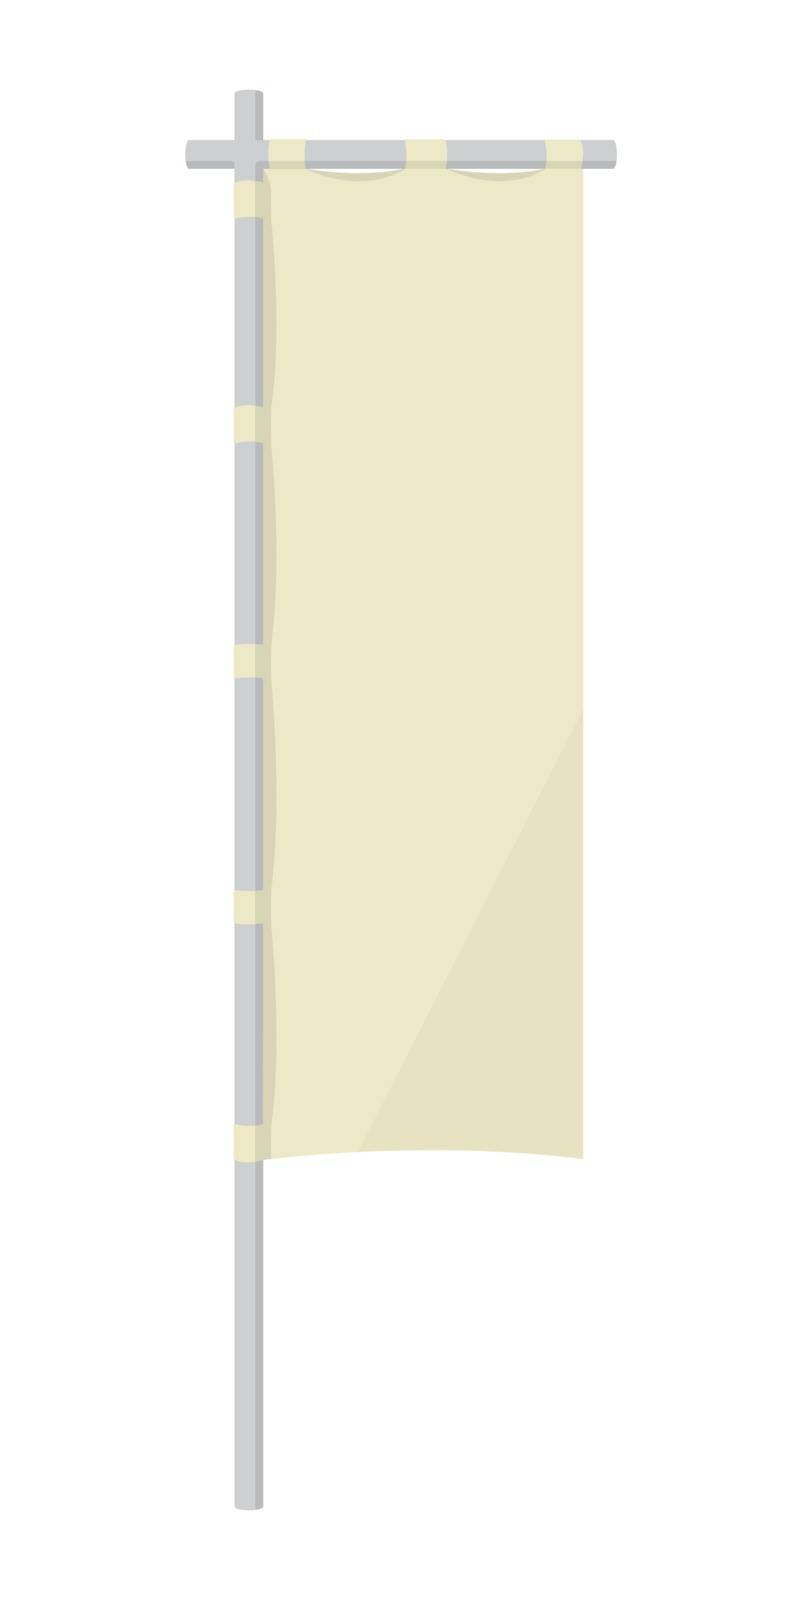 Japanese vertical flag (banner) illustration